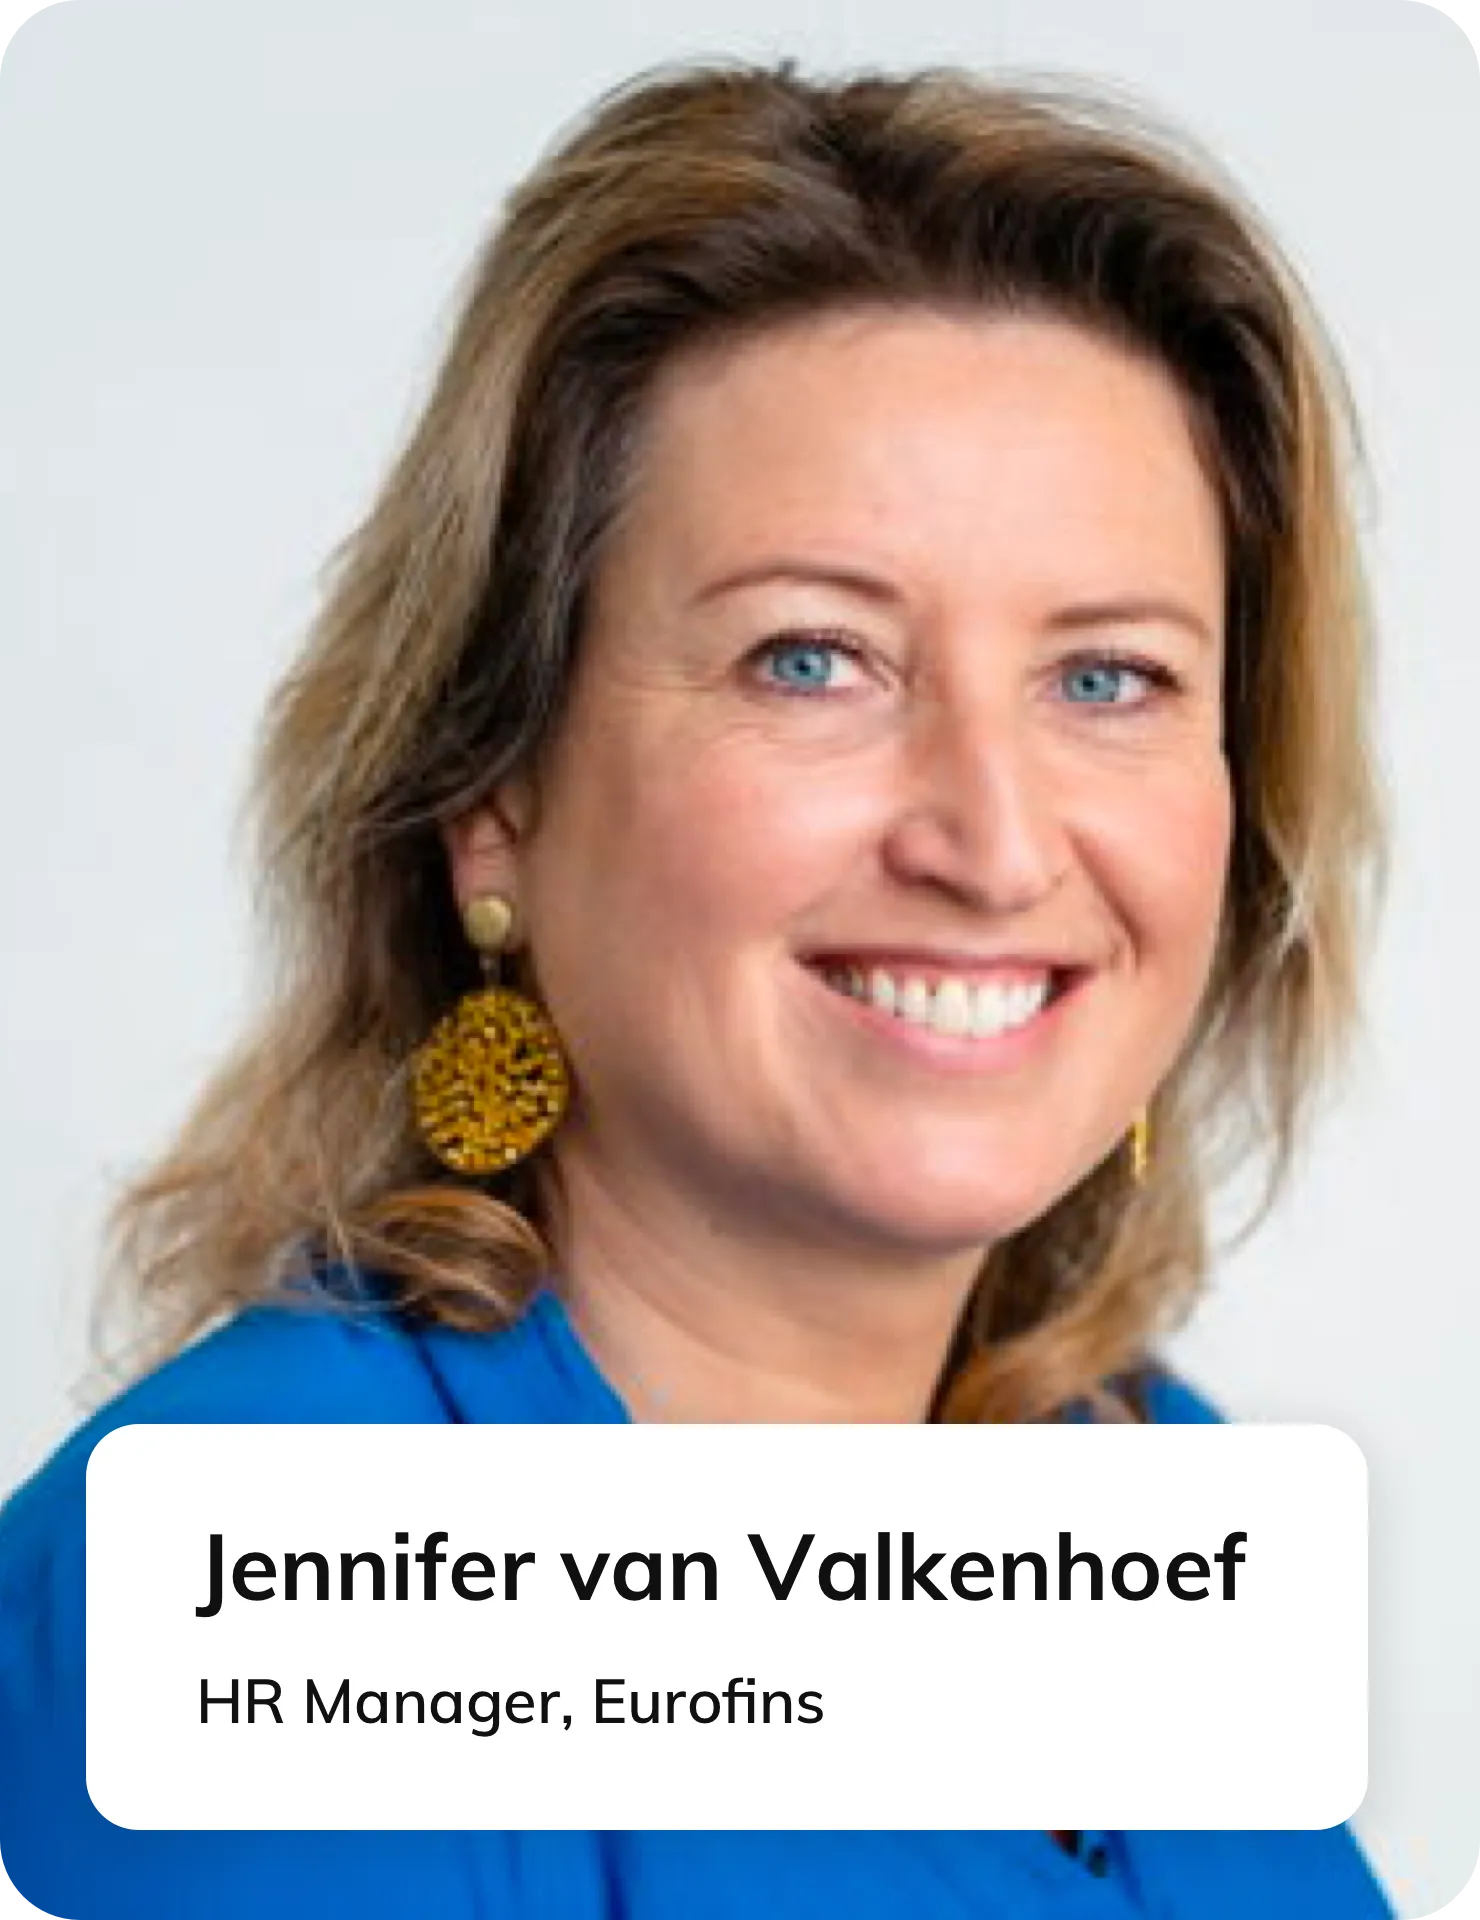 Jennifer van Valkenhoef, HR Manager bij Eurofins